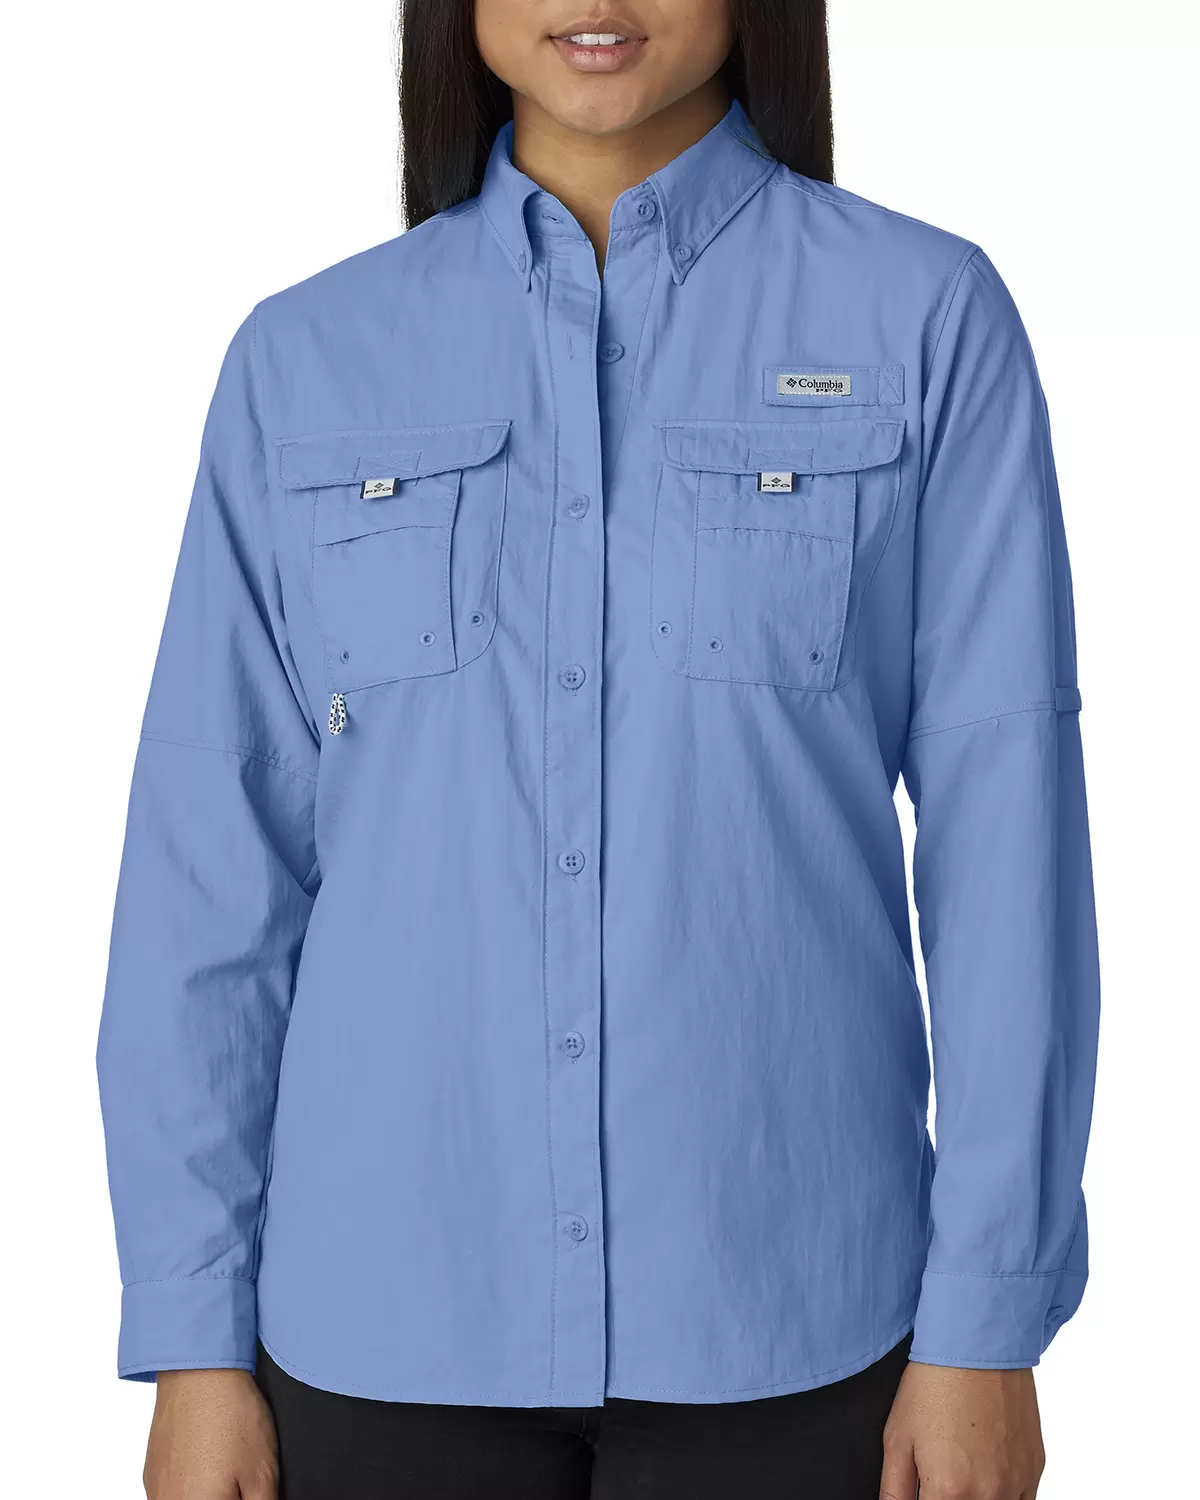 Columbia Sportswear 7314 Ladies' Bahama™ Long-Sleeve Shirt - From